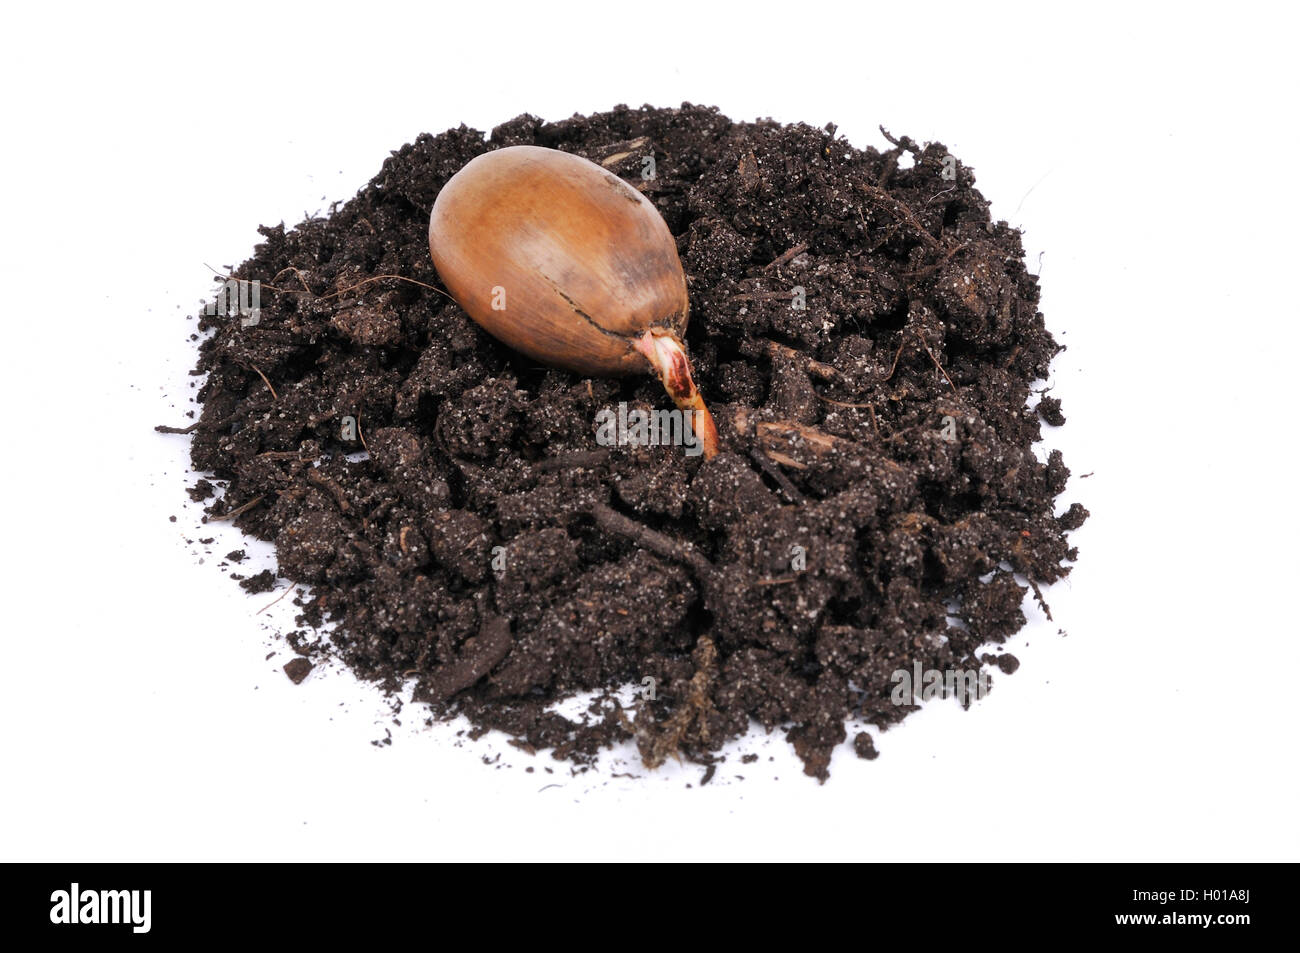 Turkey oak (Quercus cerris), germinating acorn on soil, cut out, Germany Stock Photo